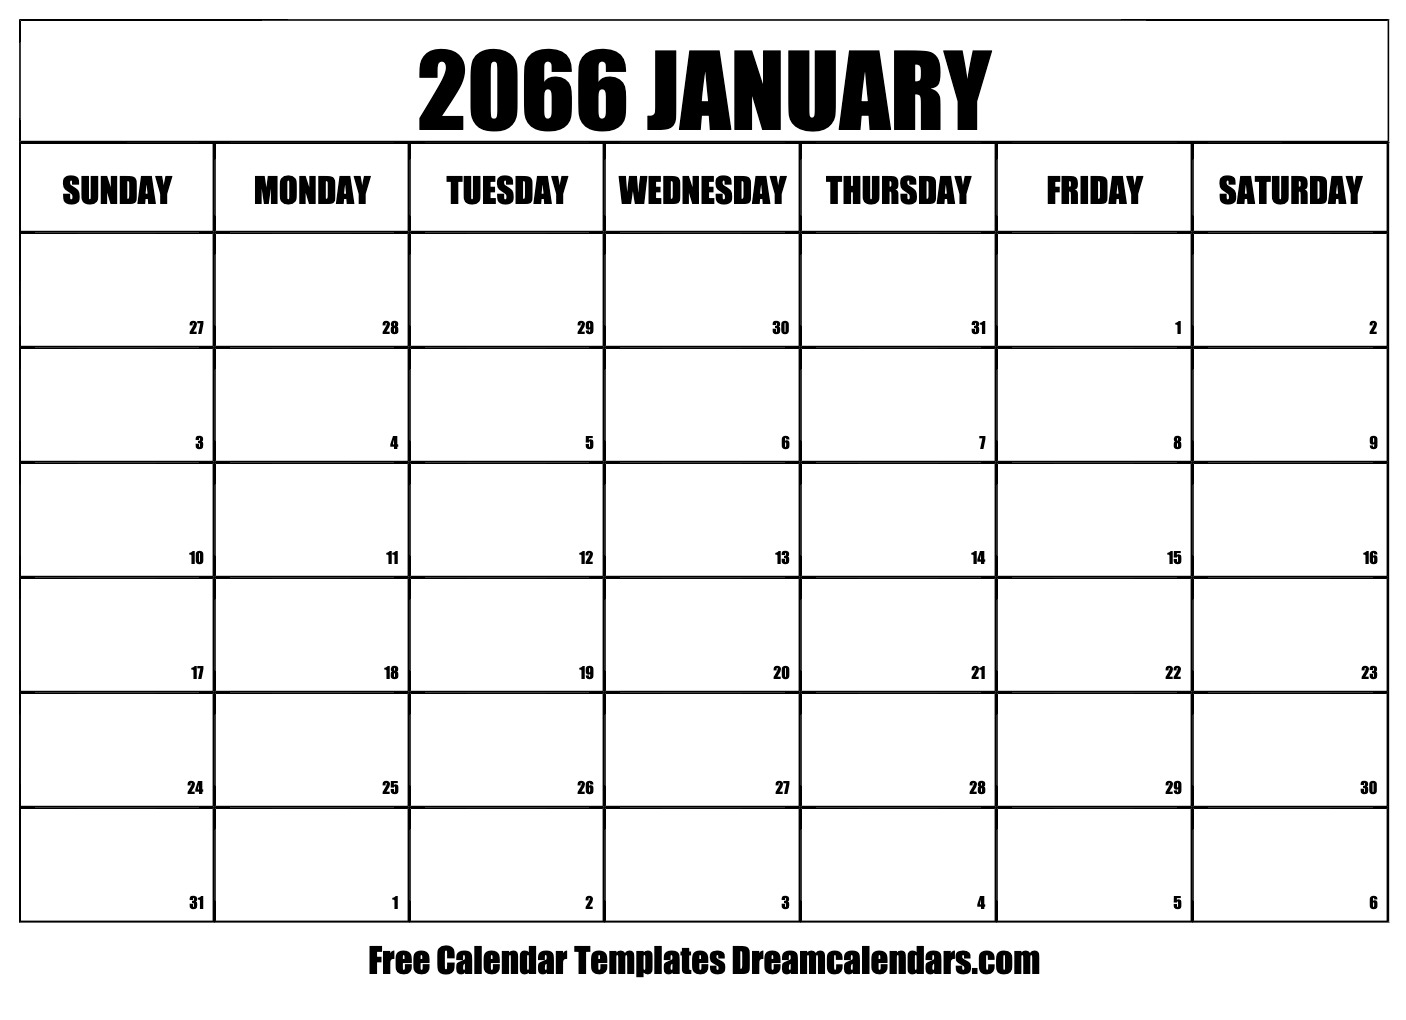 January 2066 Calendar Free Blank Printable With Holidays